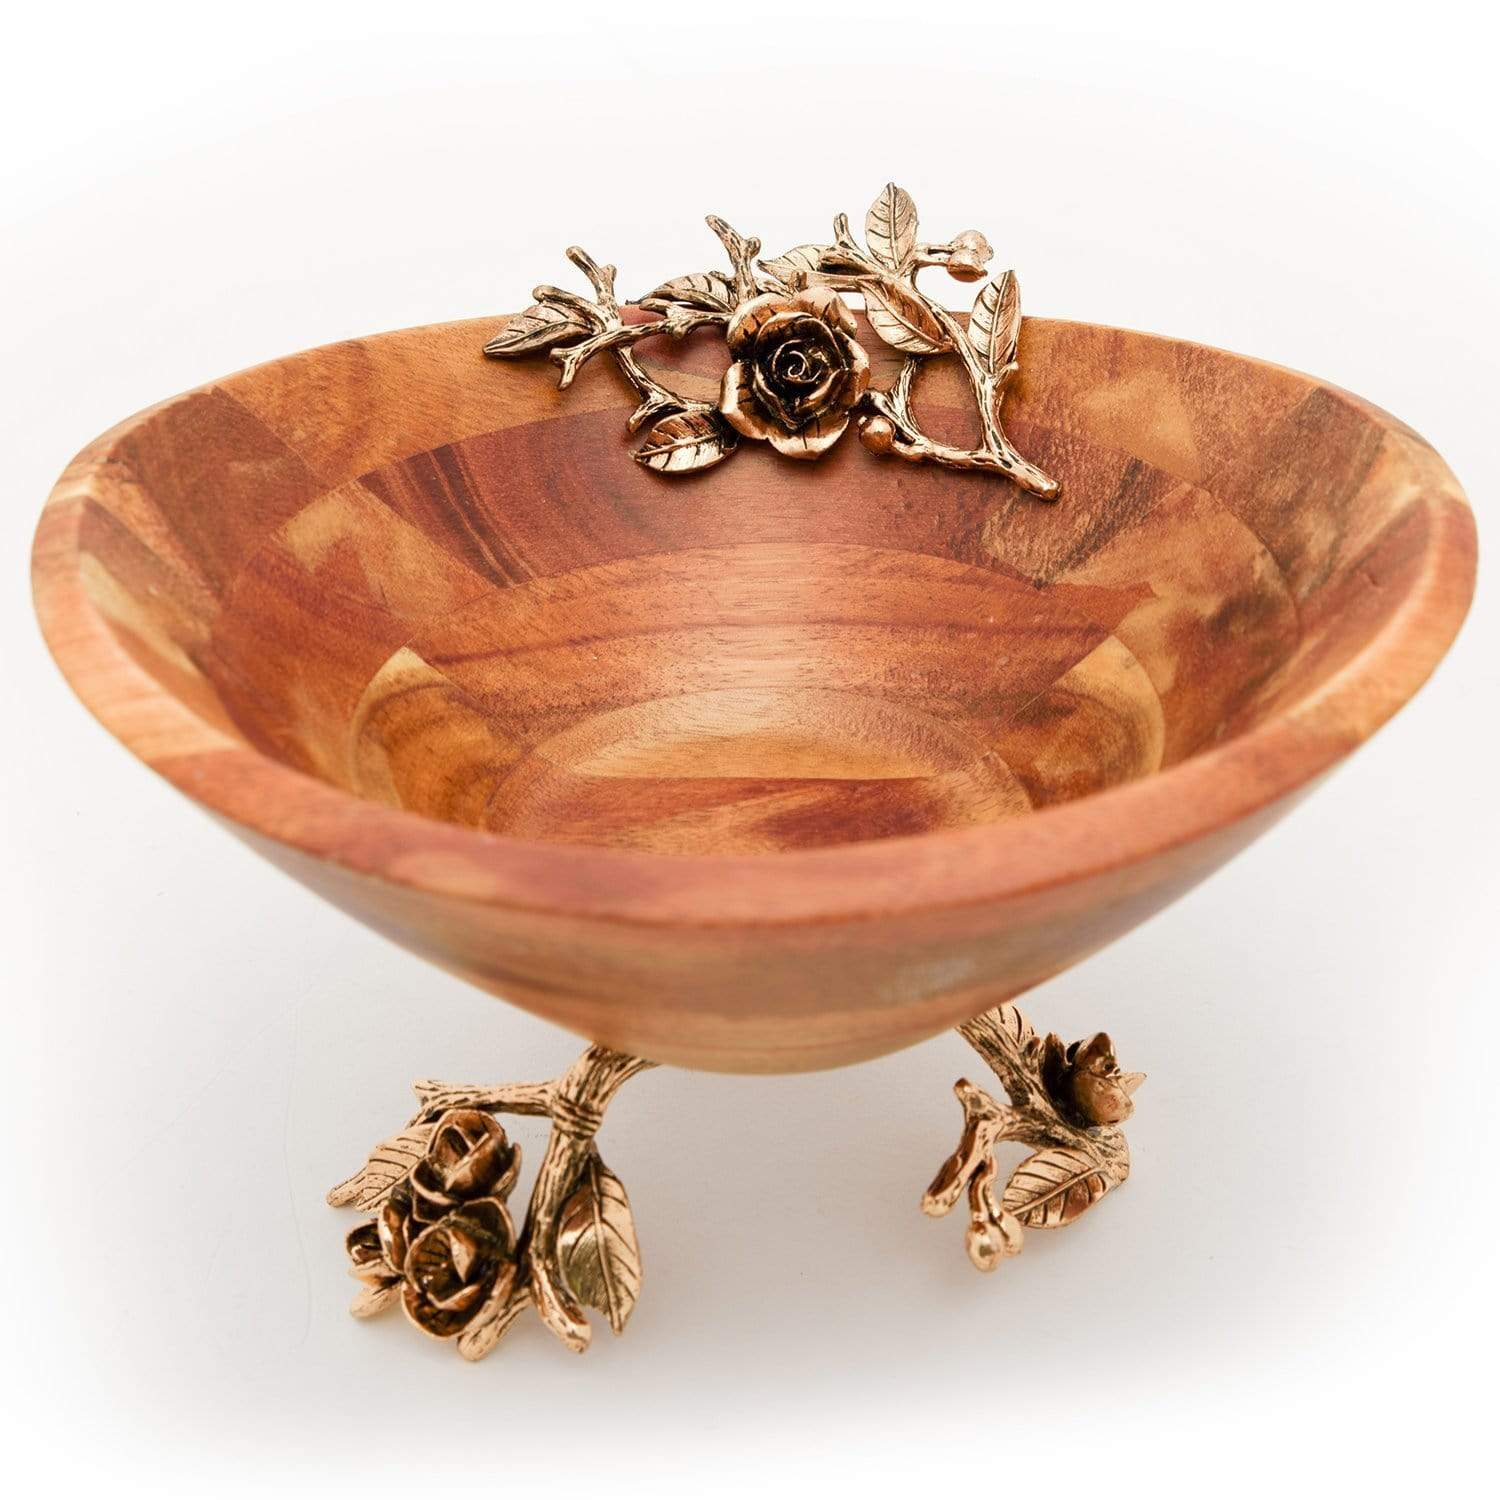 Otantik TW6001S 1 Piece Wood Bowl - Antique Gold, Small - TW6001S - Jashanmal Home